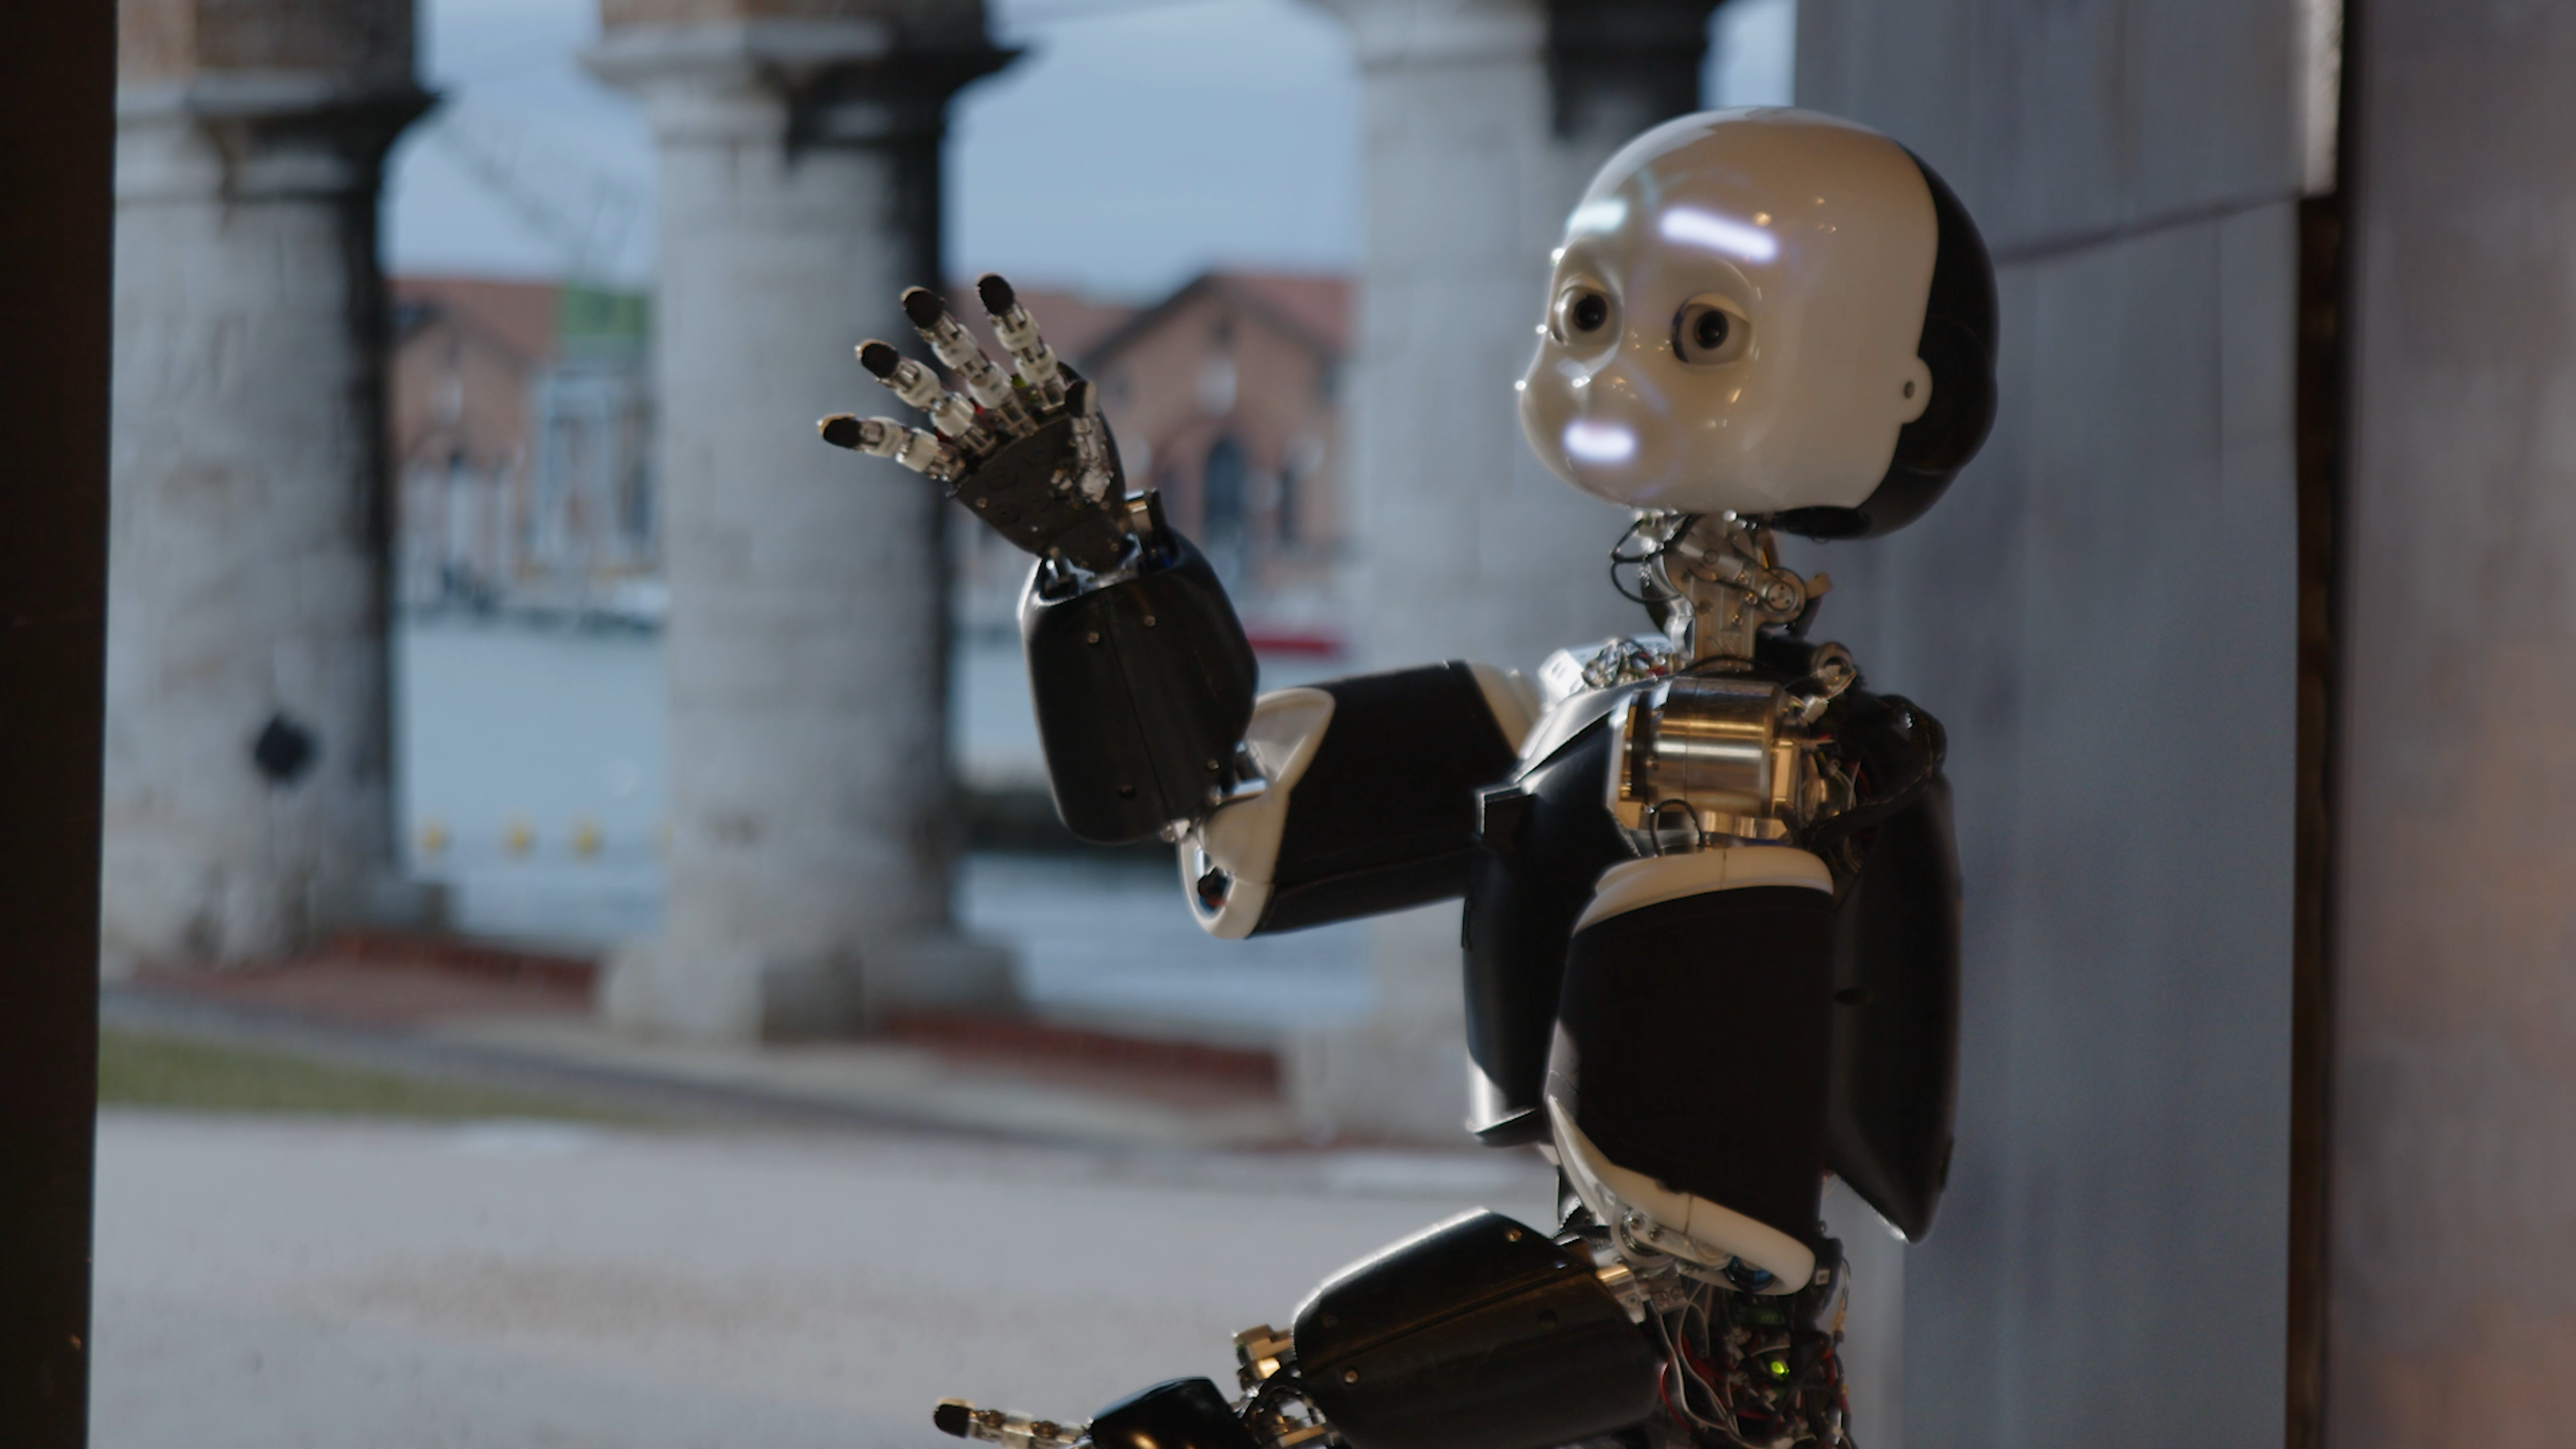 Robotic avatar makes you visit Venice from kilometers away